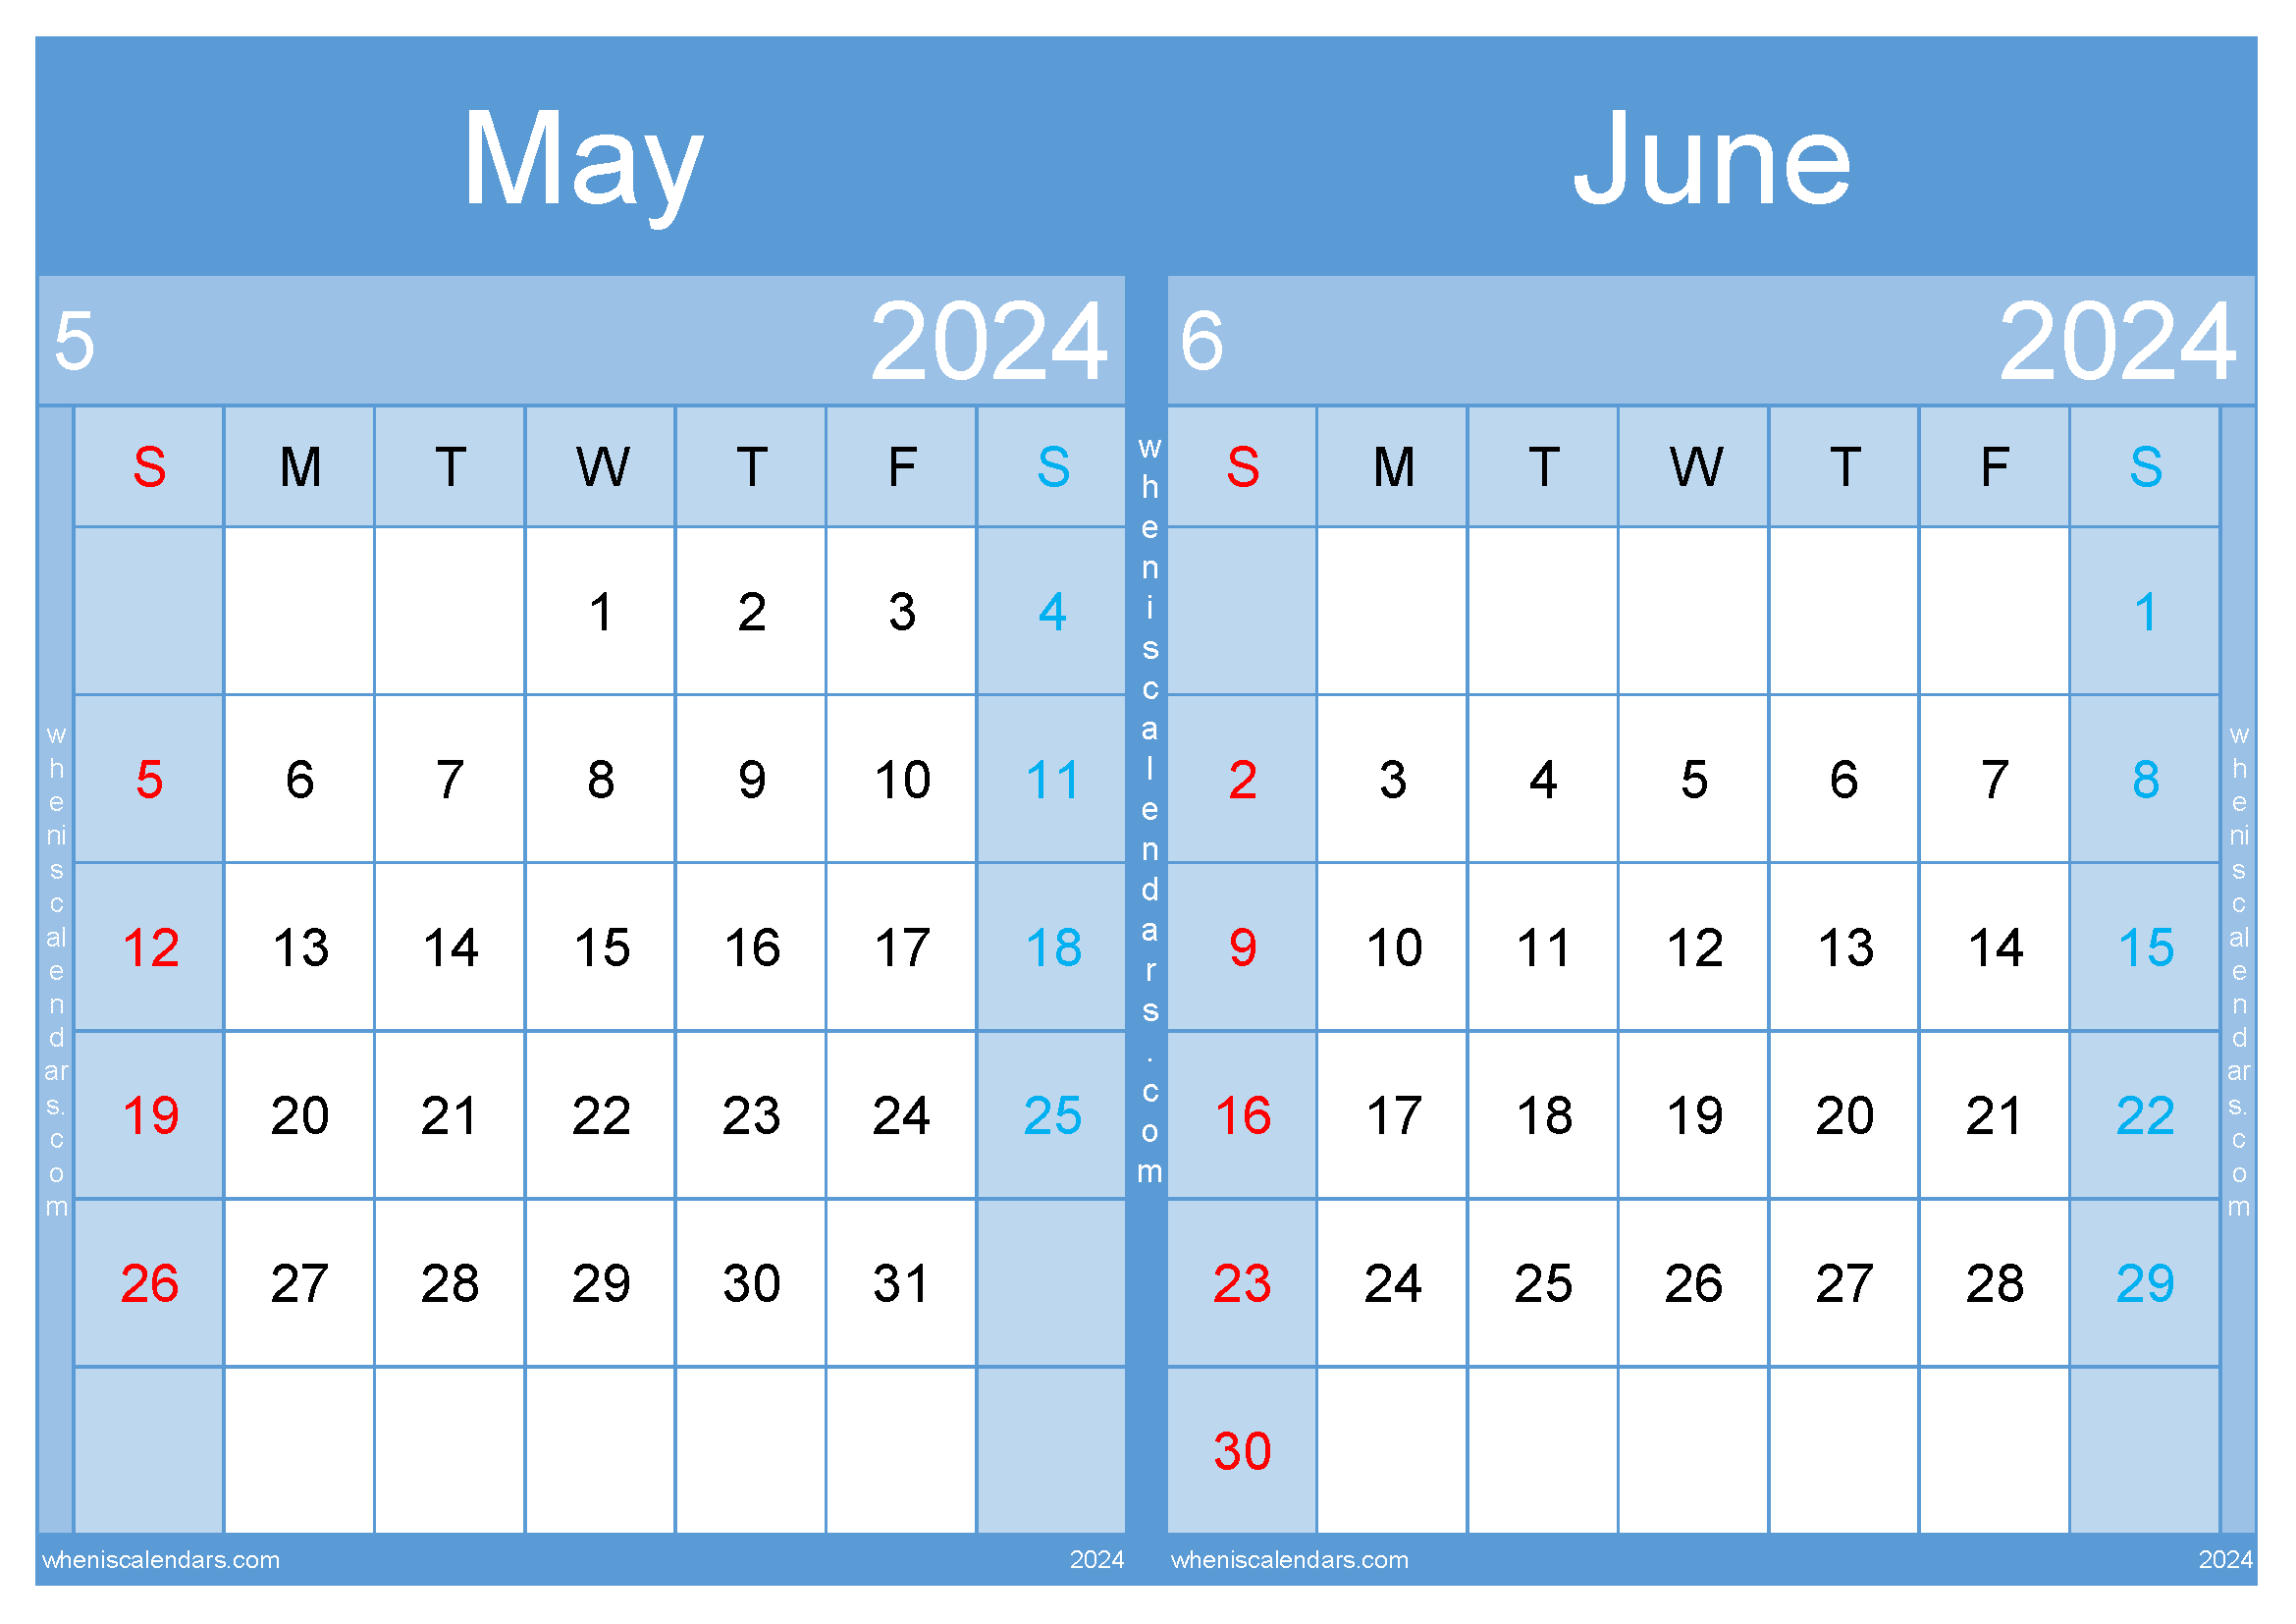 Download calendar for May June 2024 A4 MJ24037